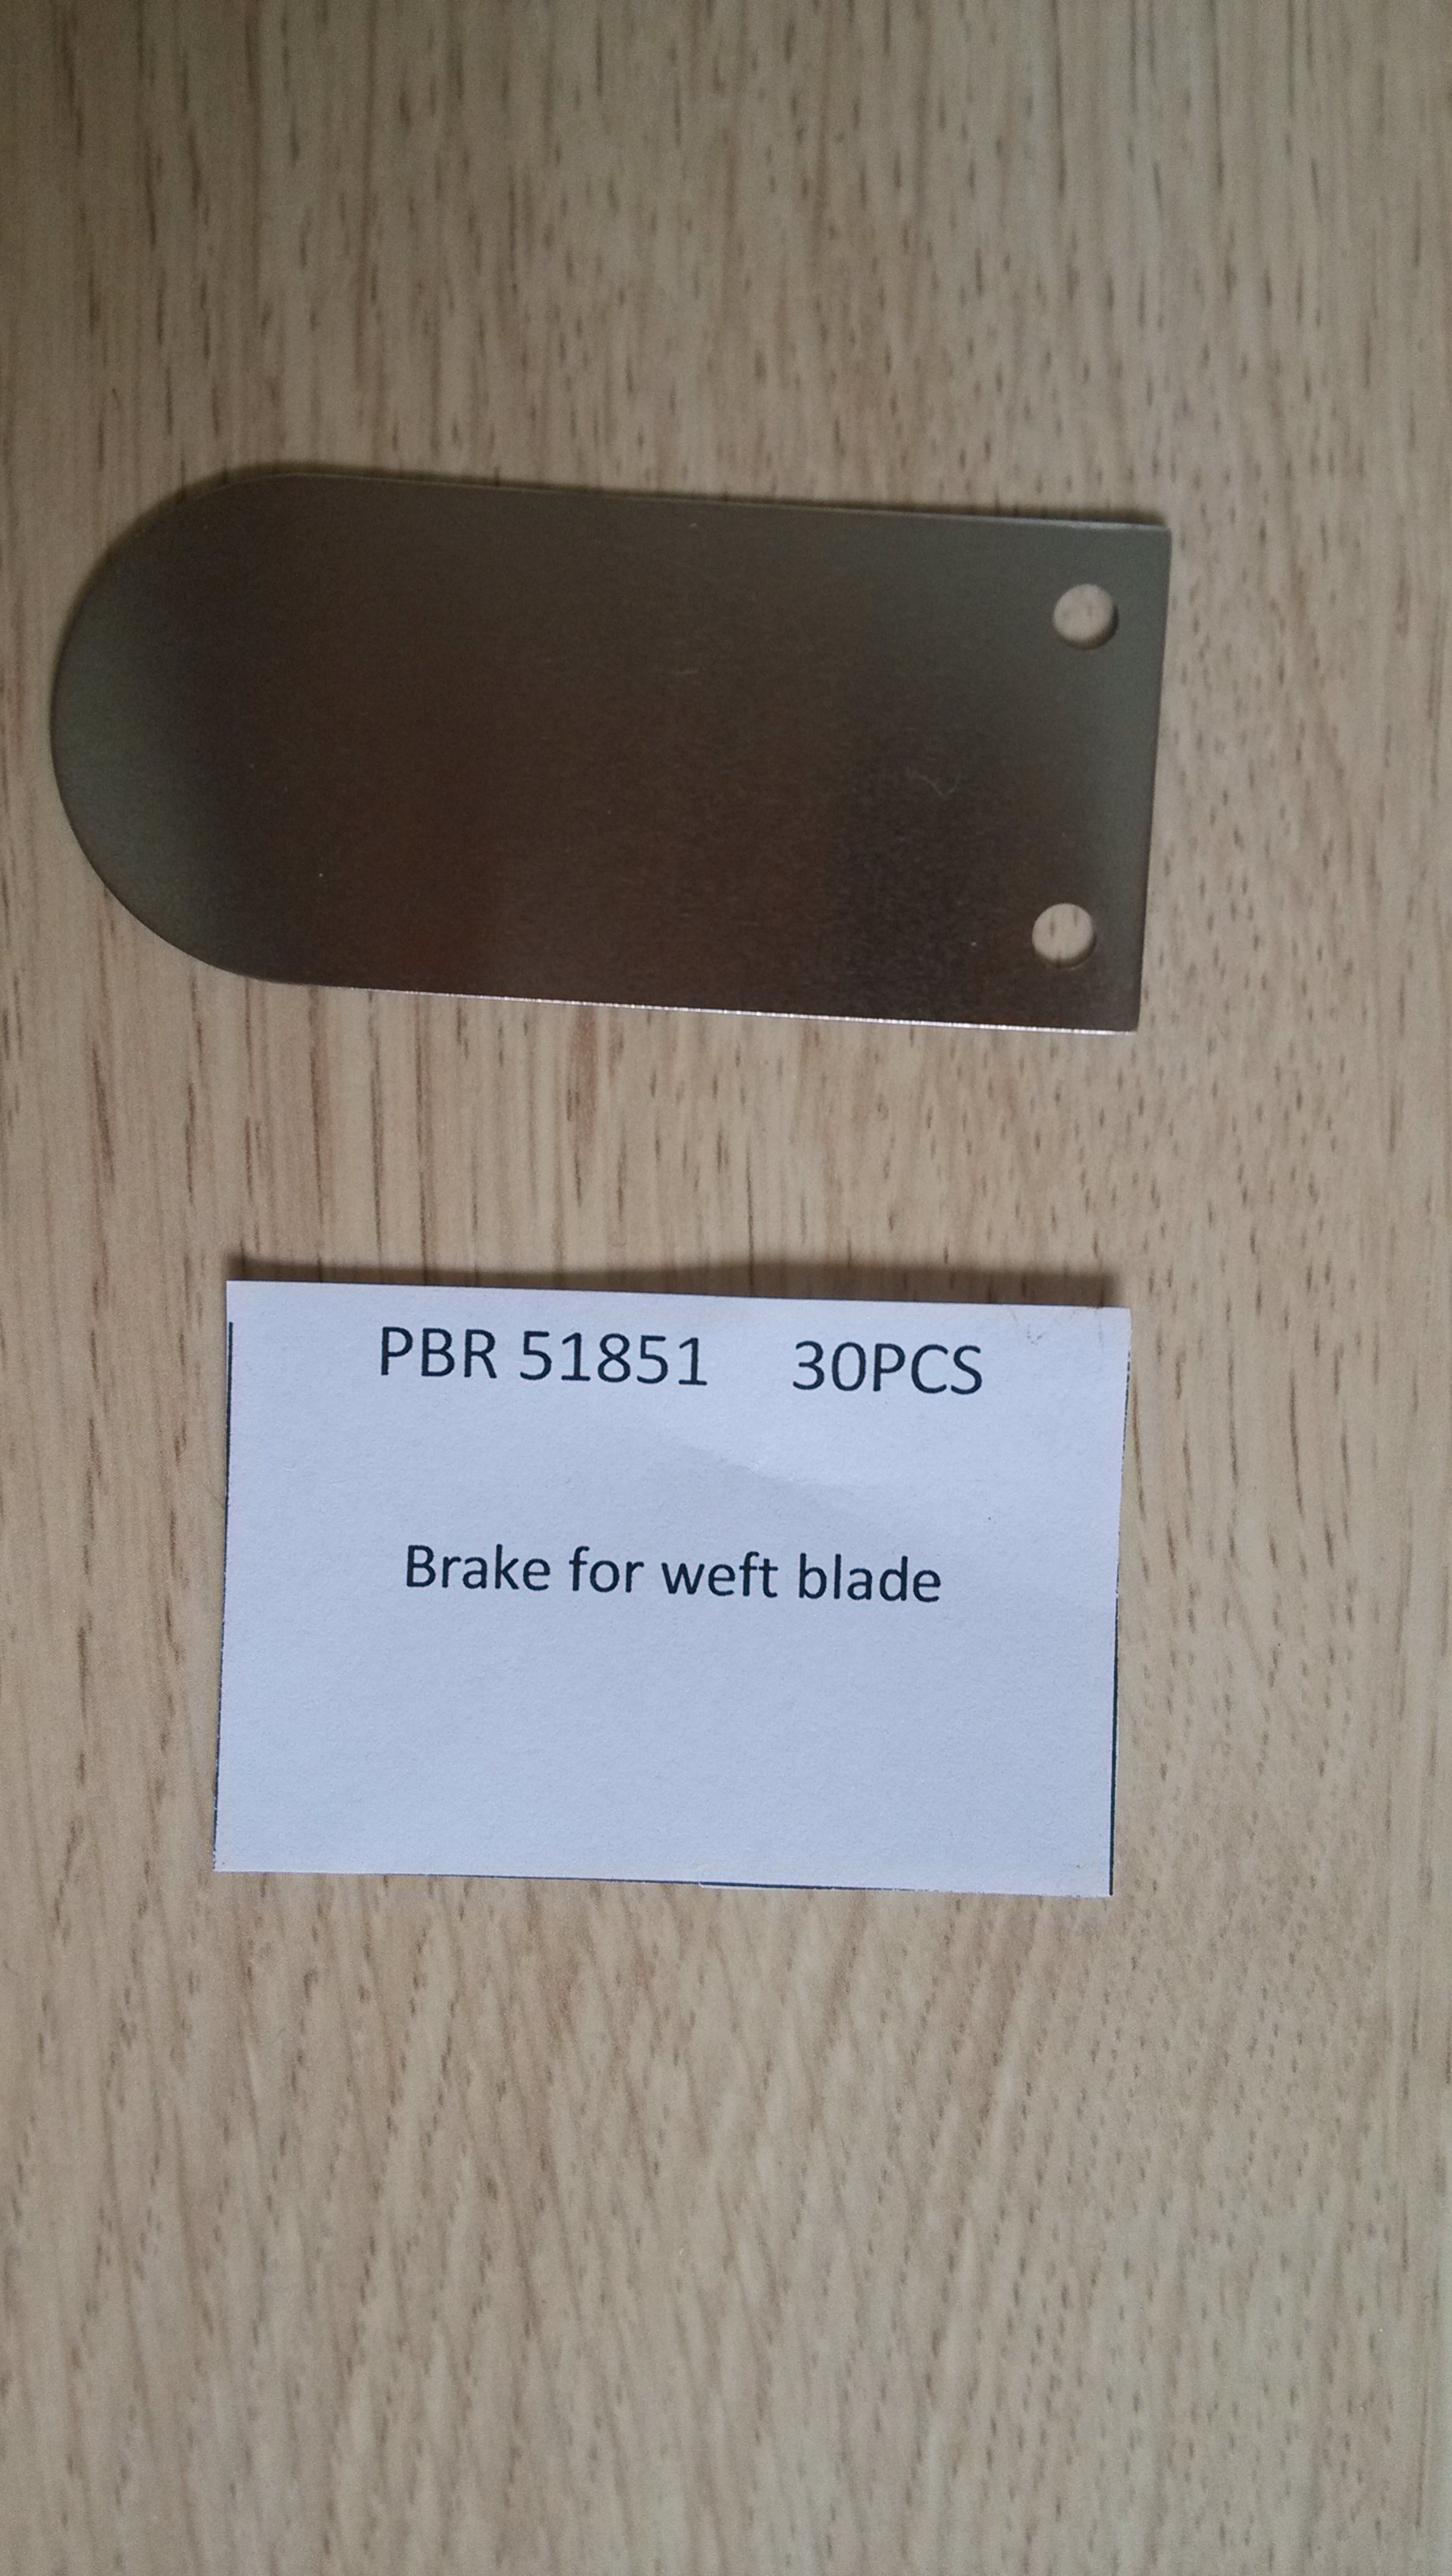 PBR 51851 Brake for weft blade